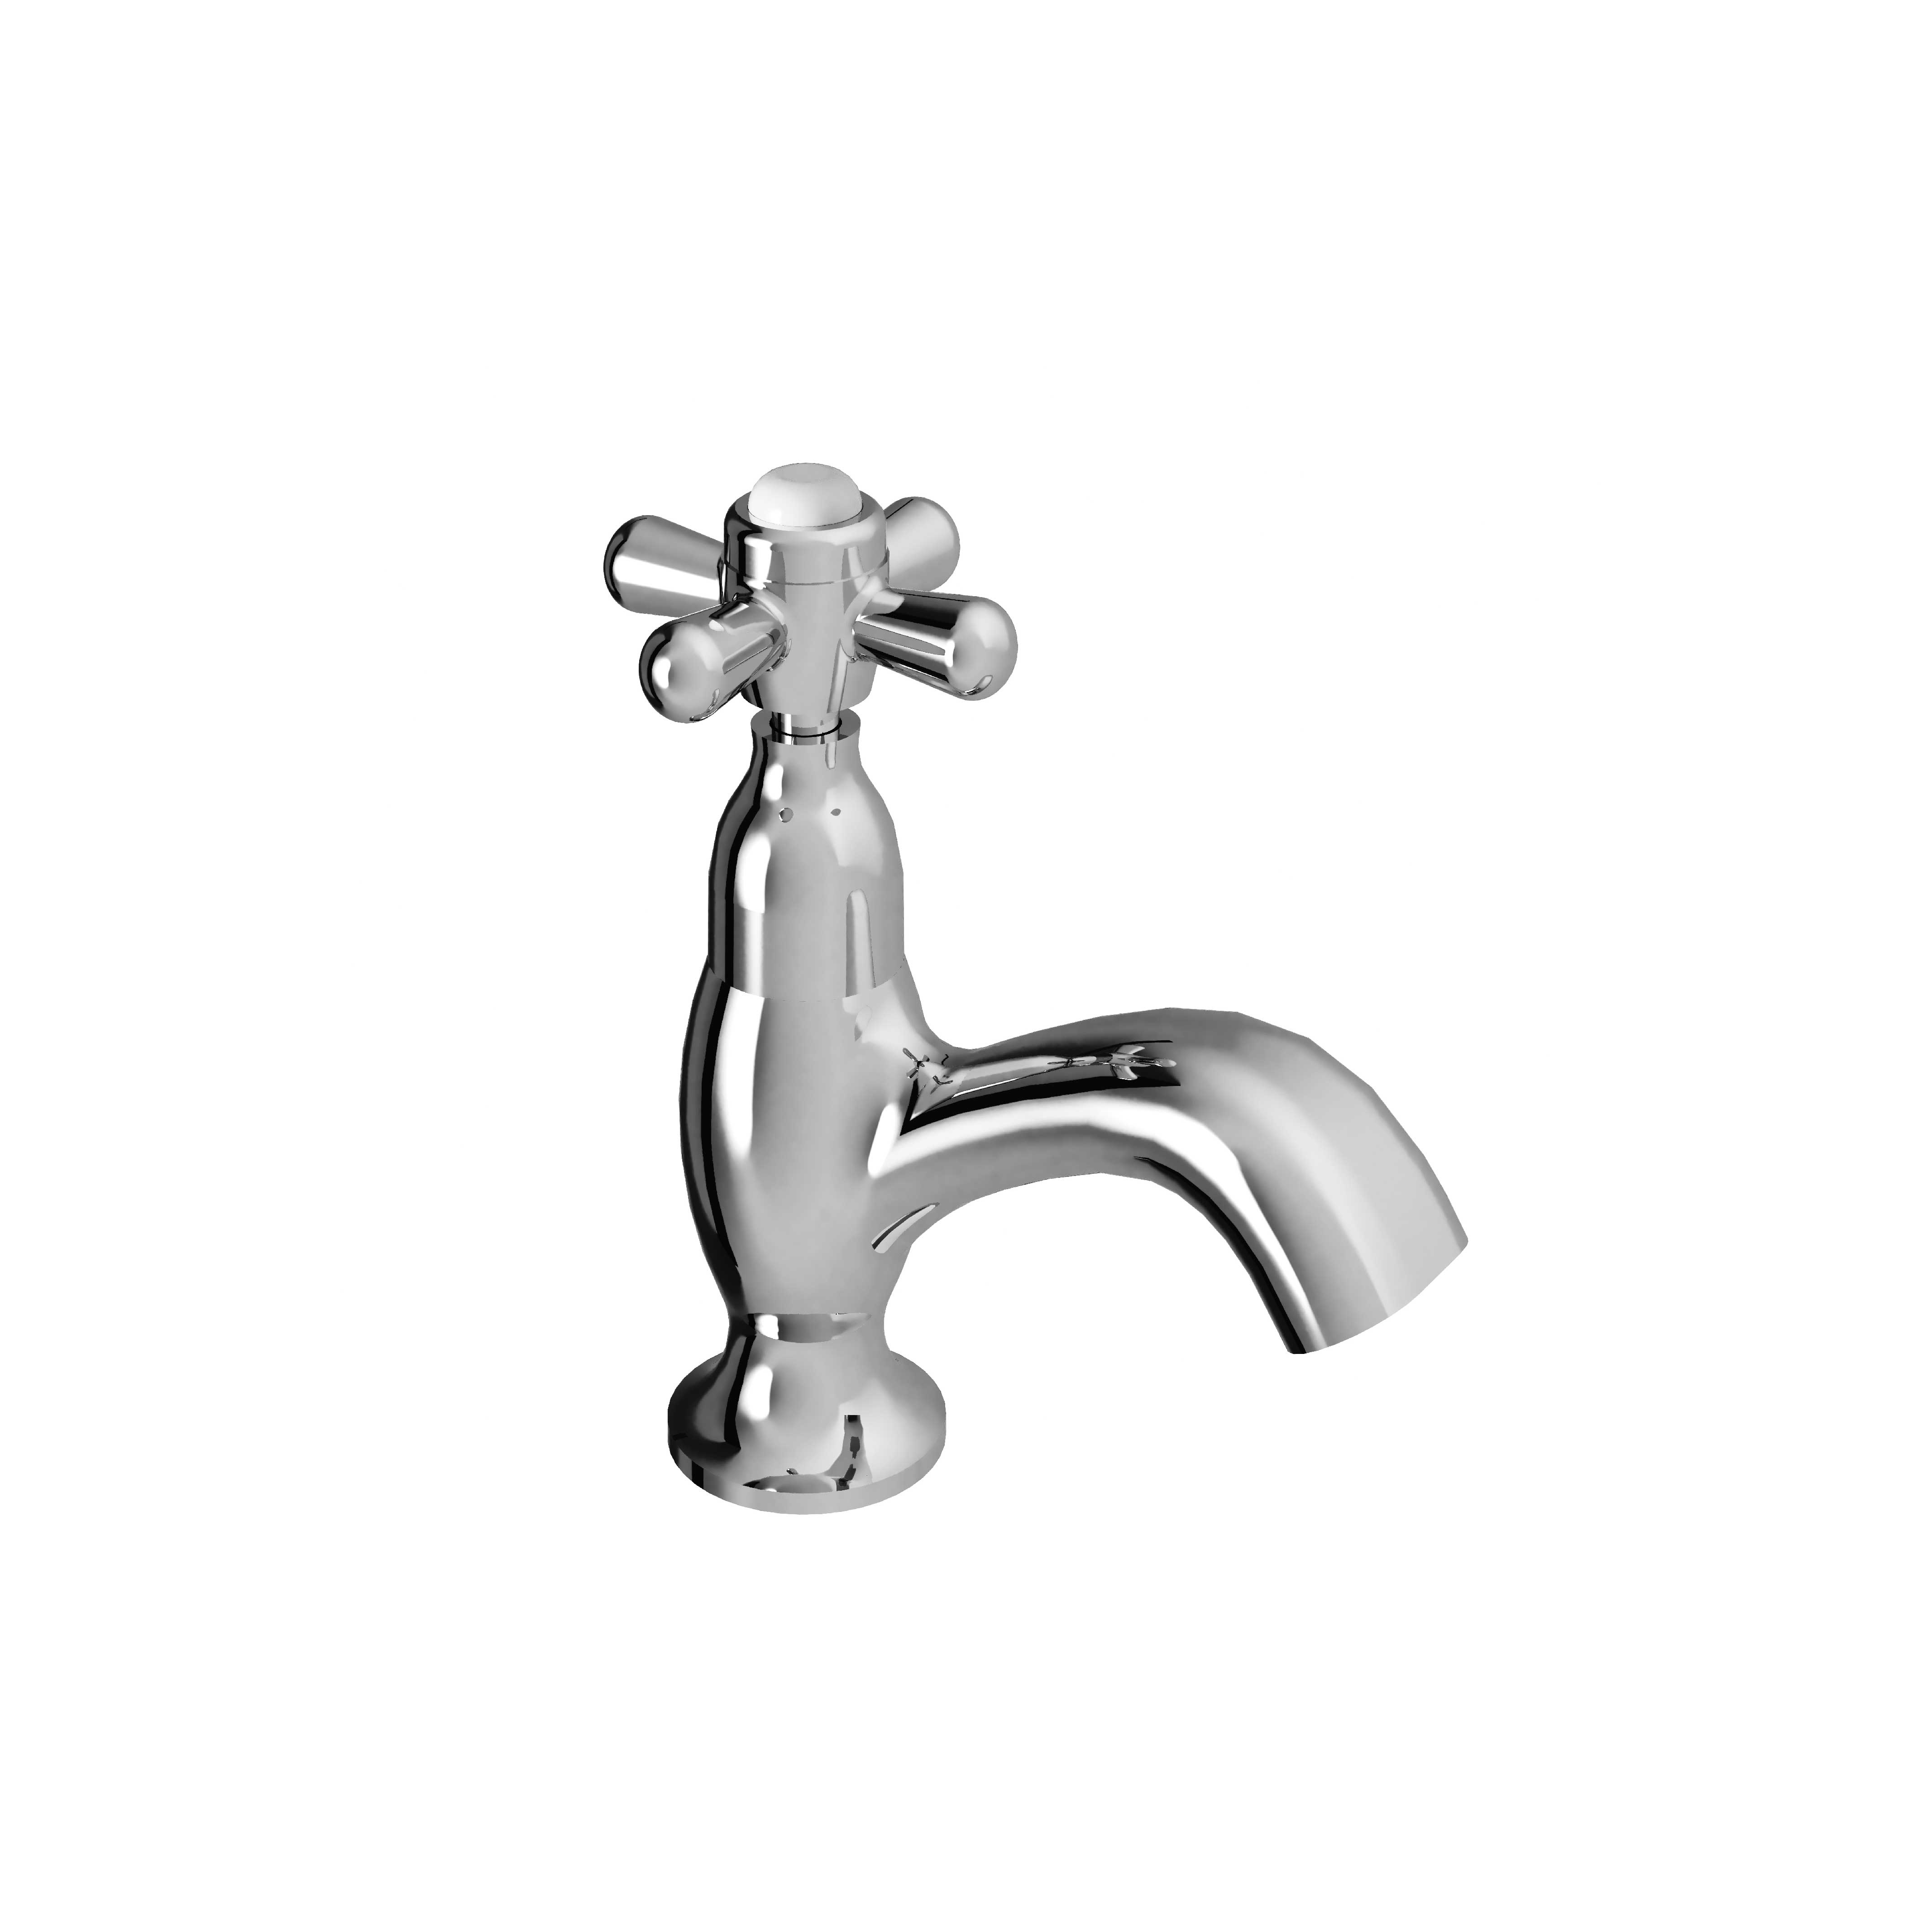 M40-4S1 Rim mounted wash-hand basin tap